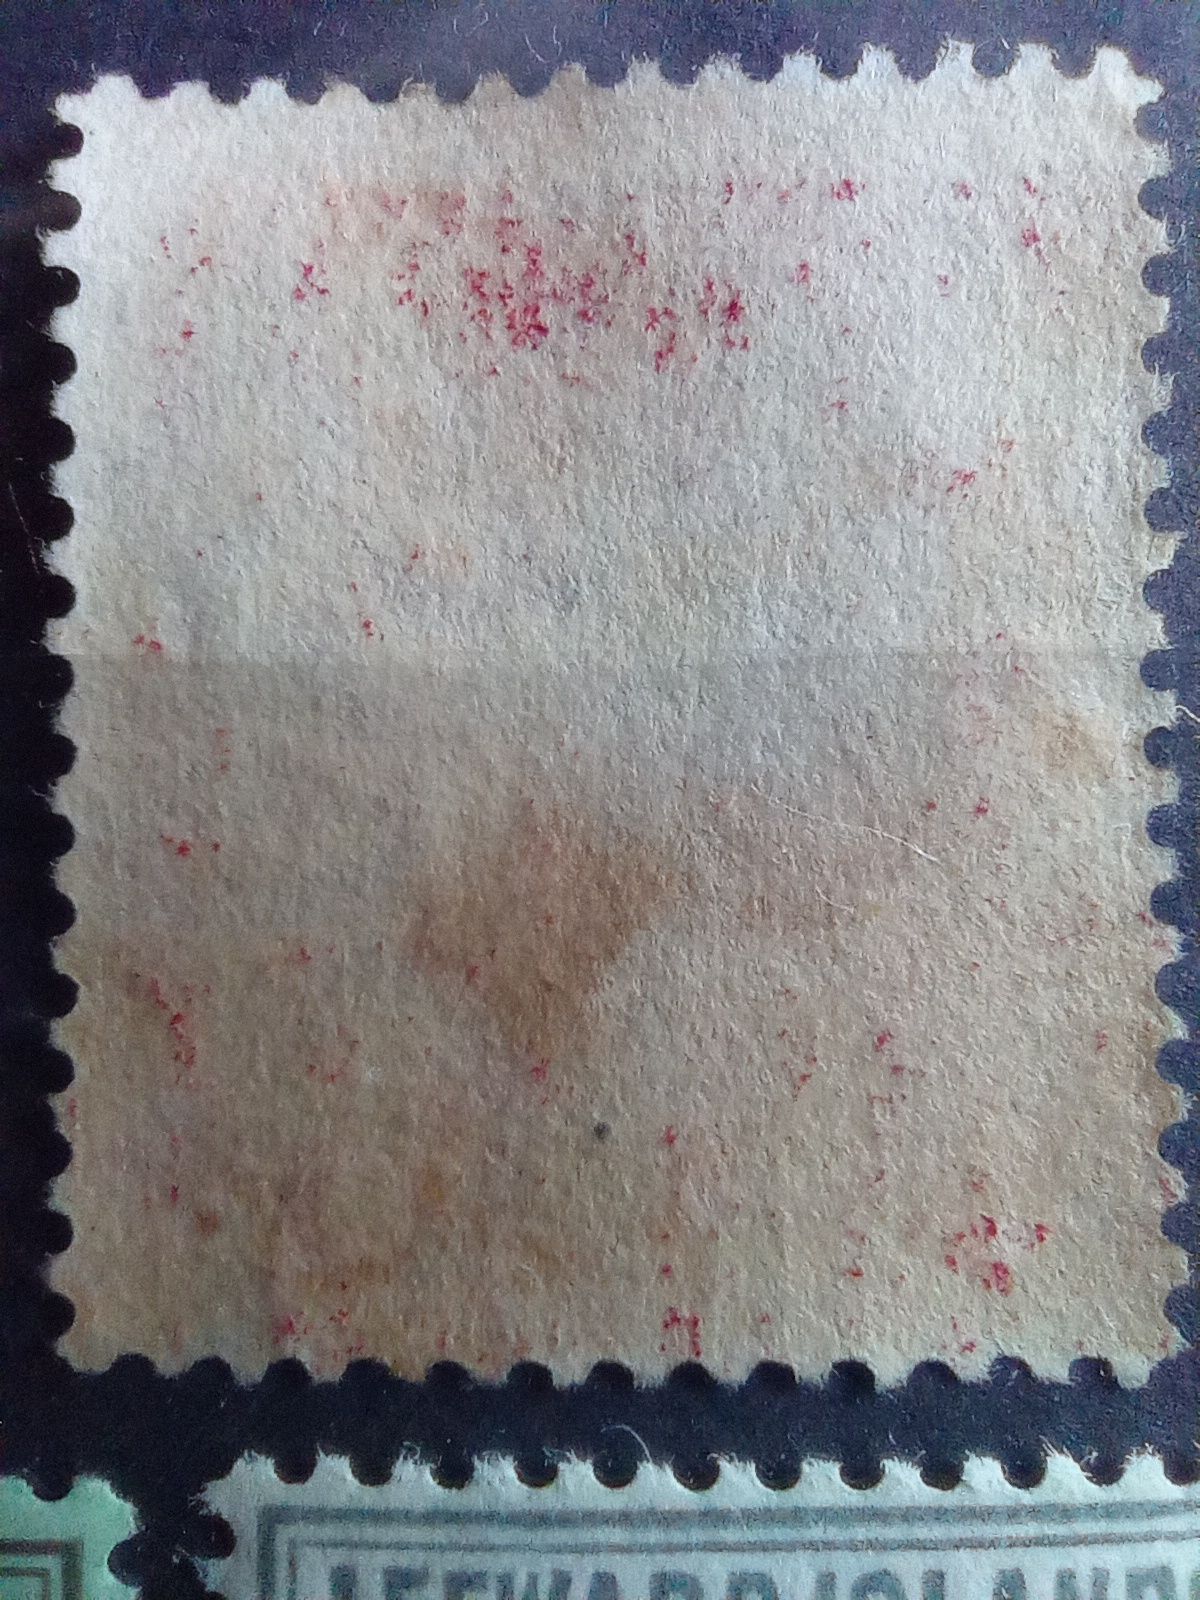 Lot timbre vechi coloni UK Anglia Antigua nestampilate